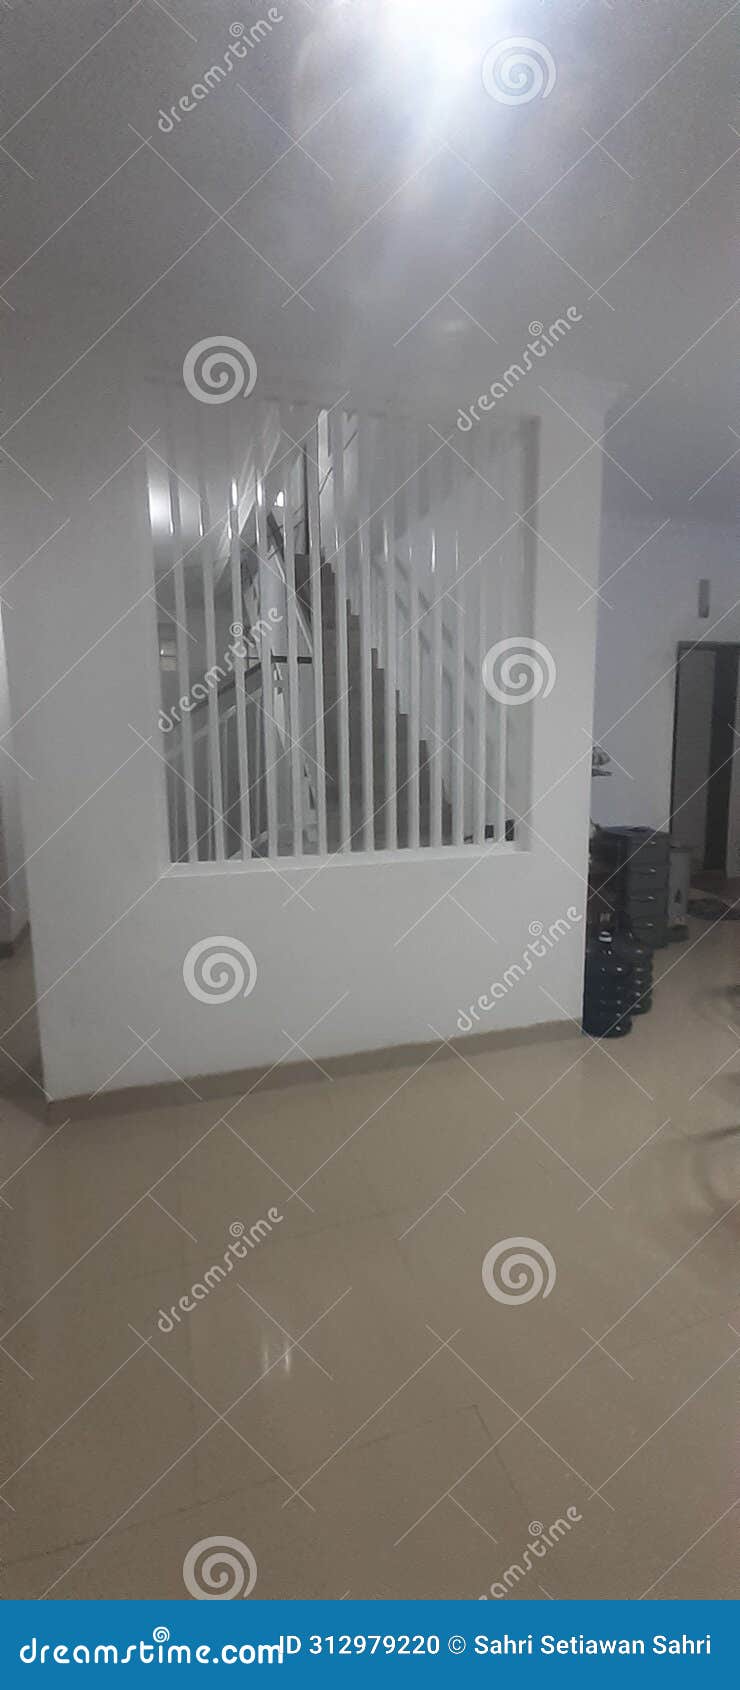 a room of a house or a latticework created from iron hollo calpanis